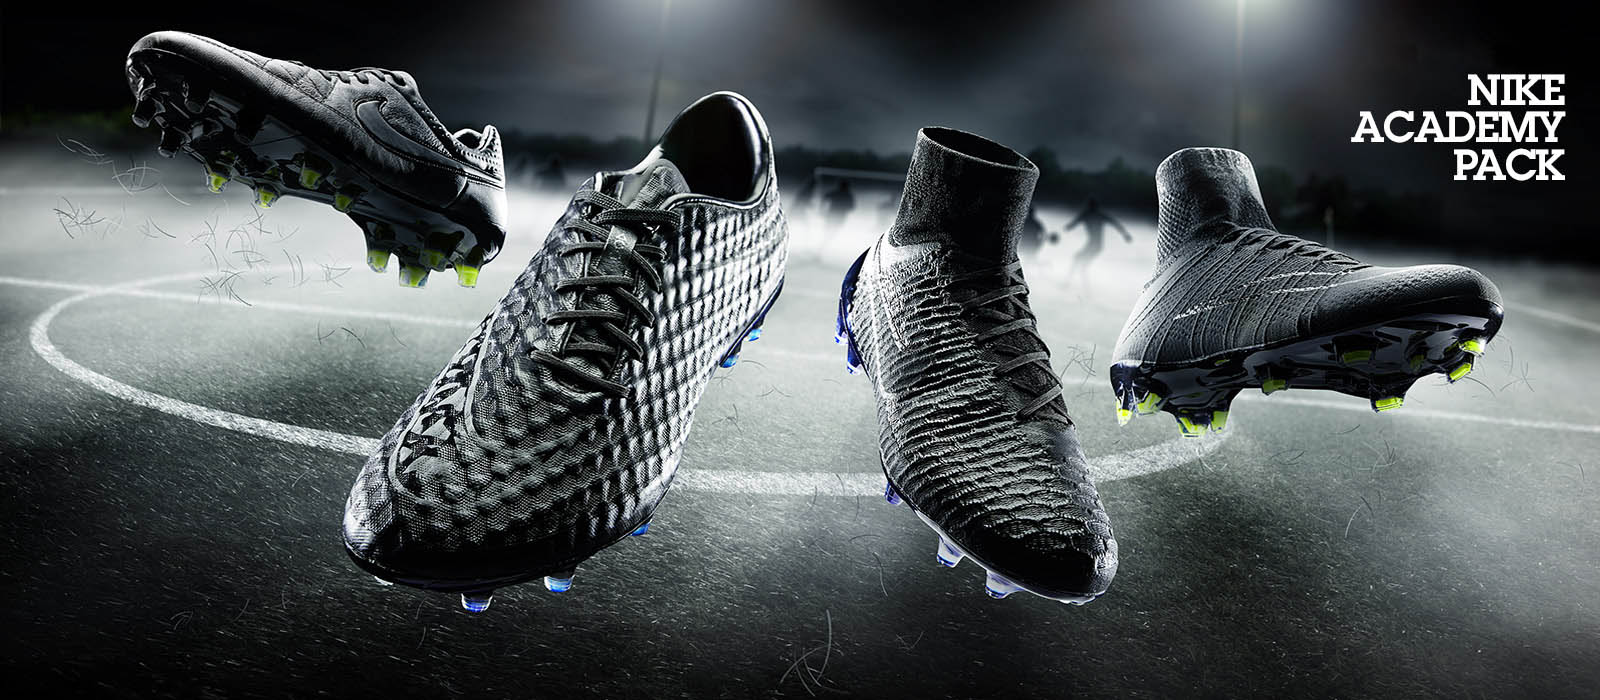 Nike 2015 Black Pack Boots - Nike Academy Pack - Footy Headlines